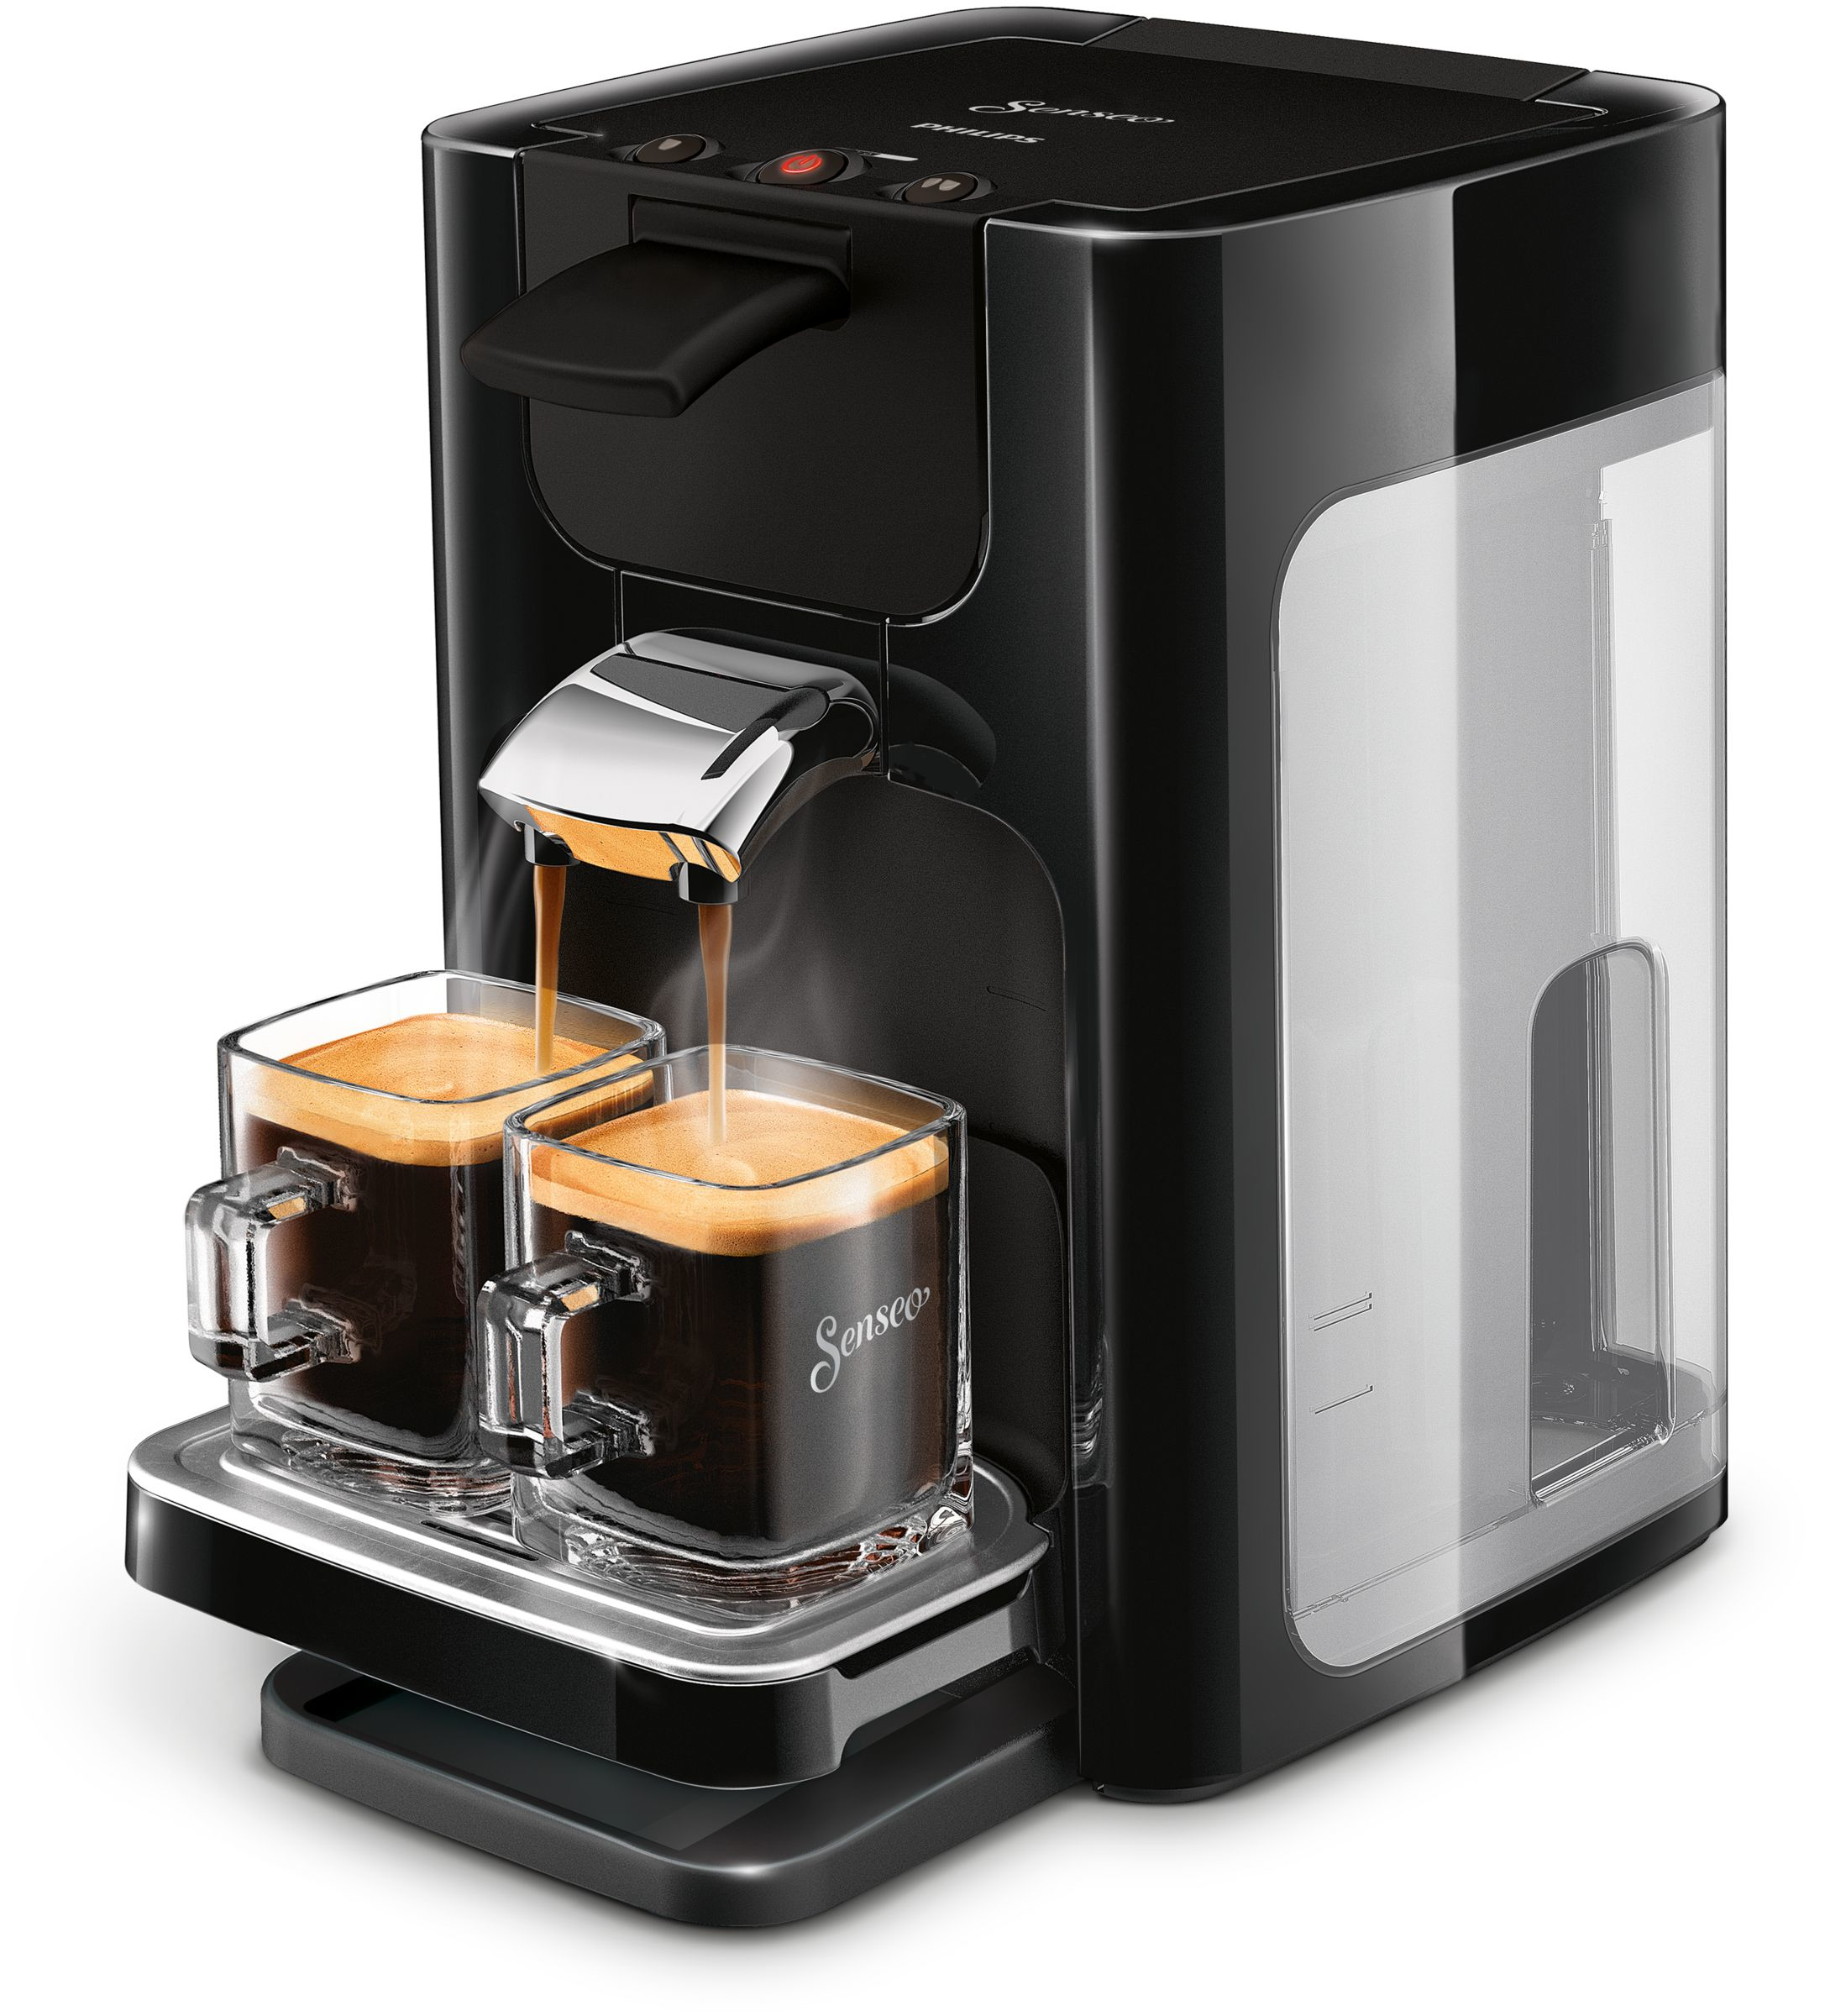 Philips HD7865/60R1 coffee maker